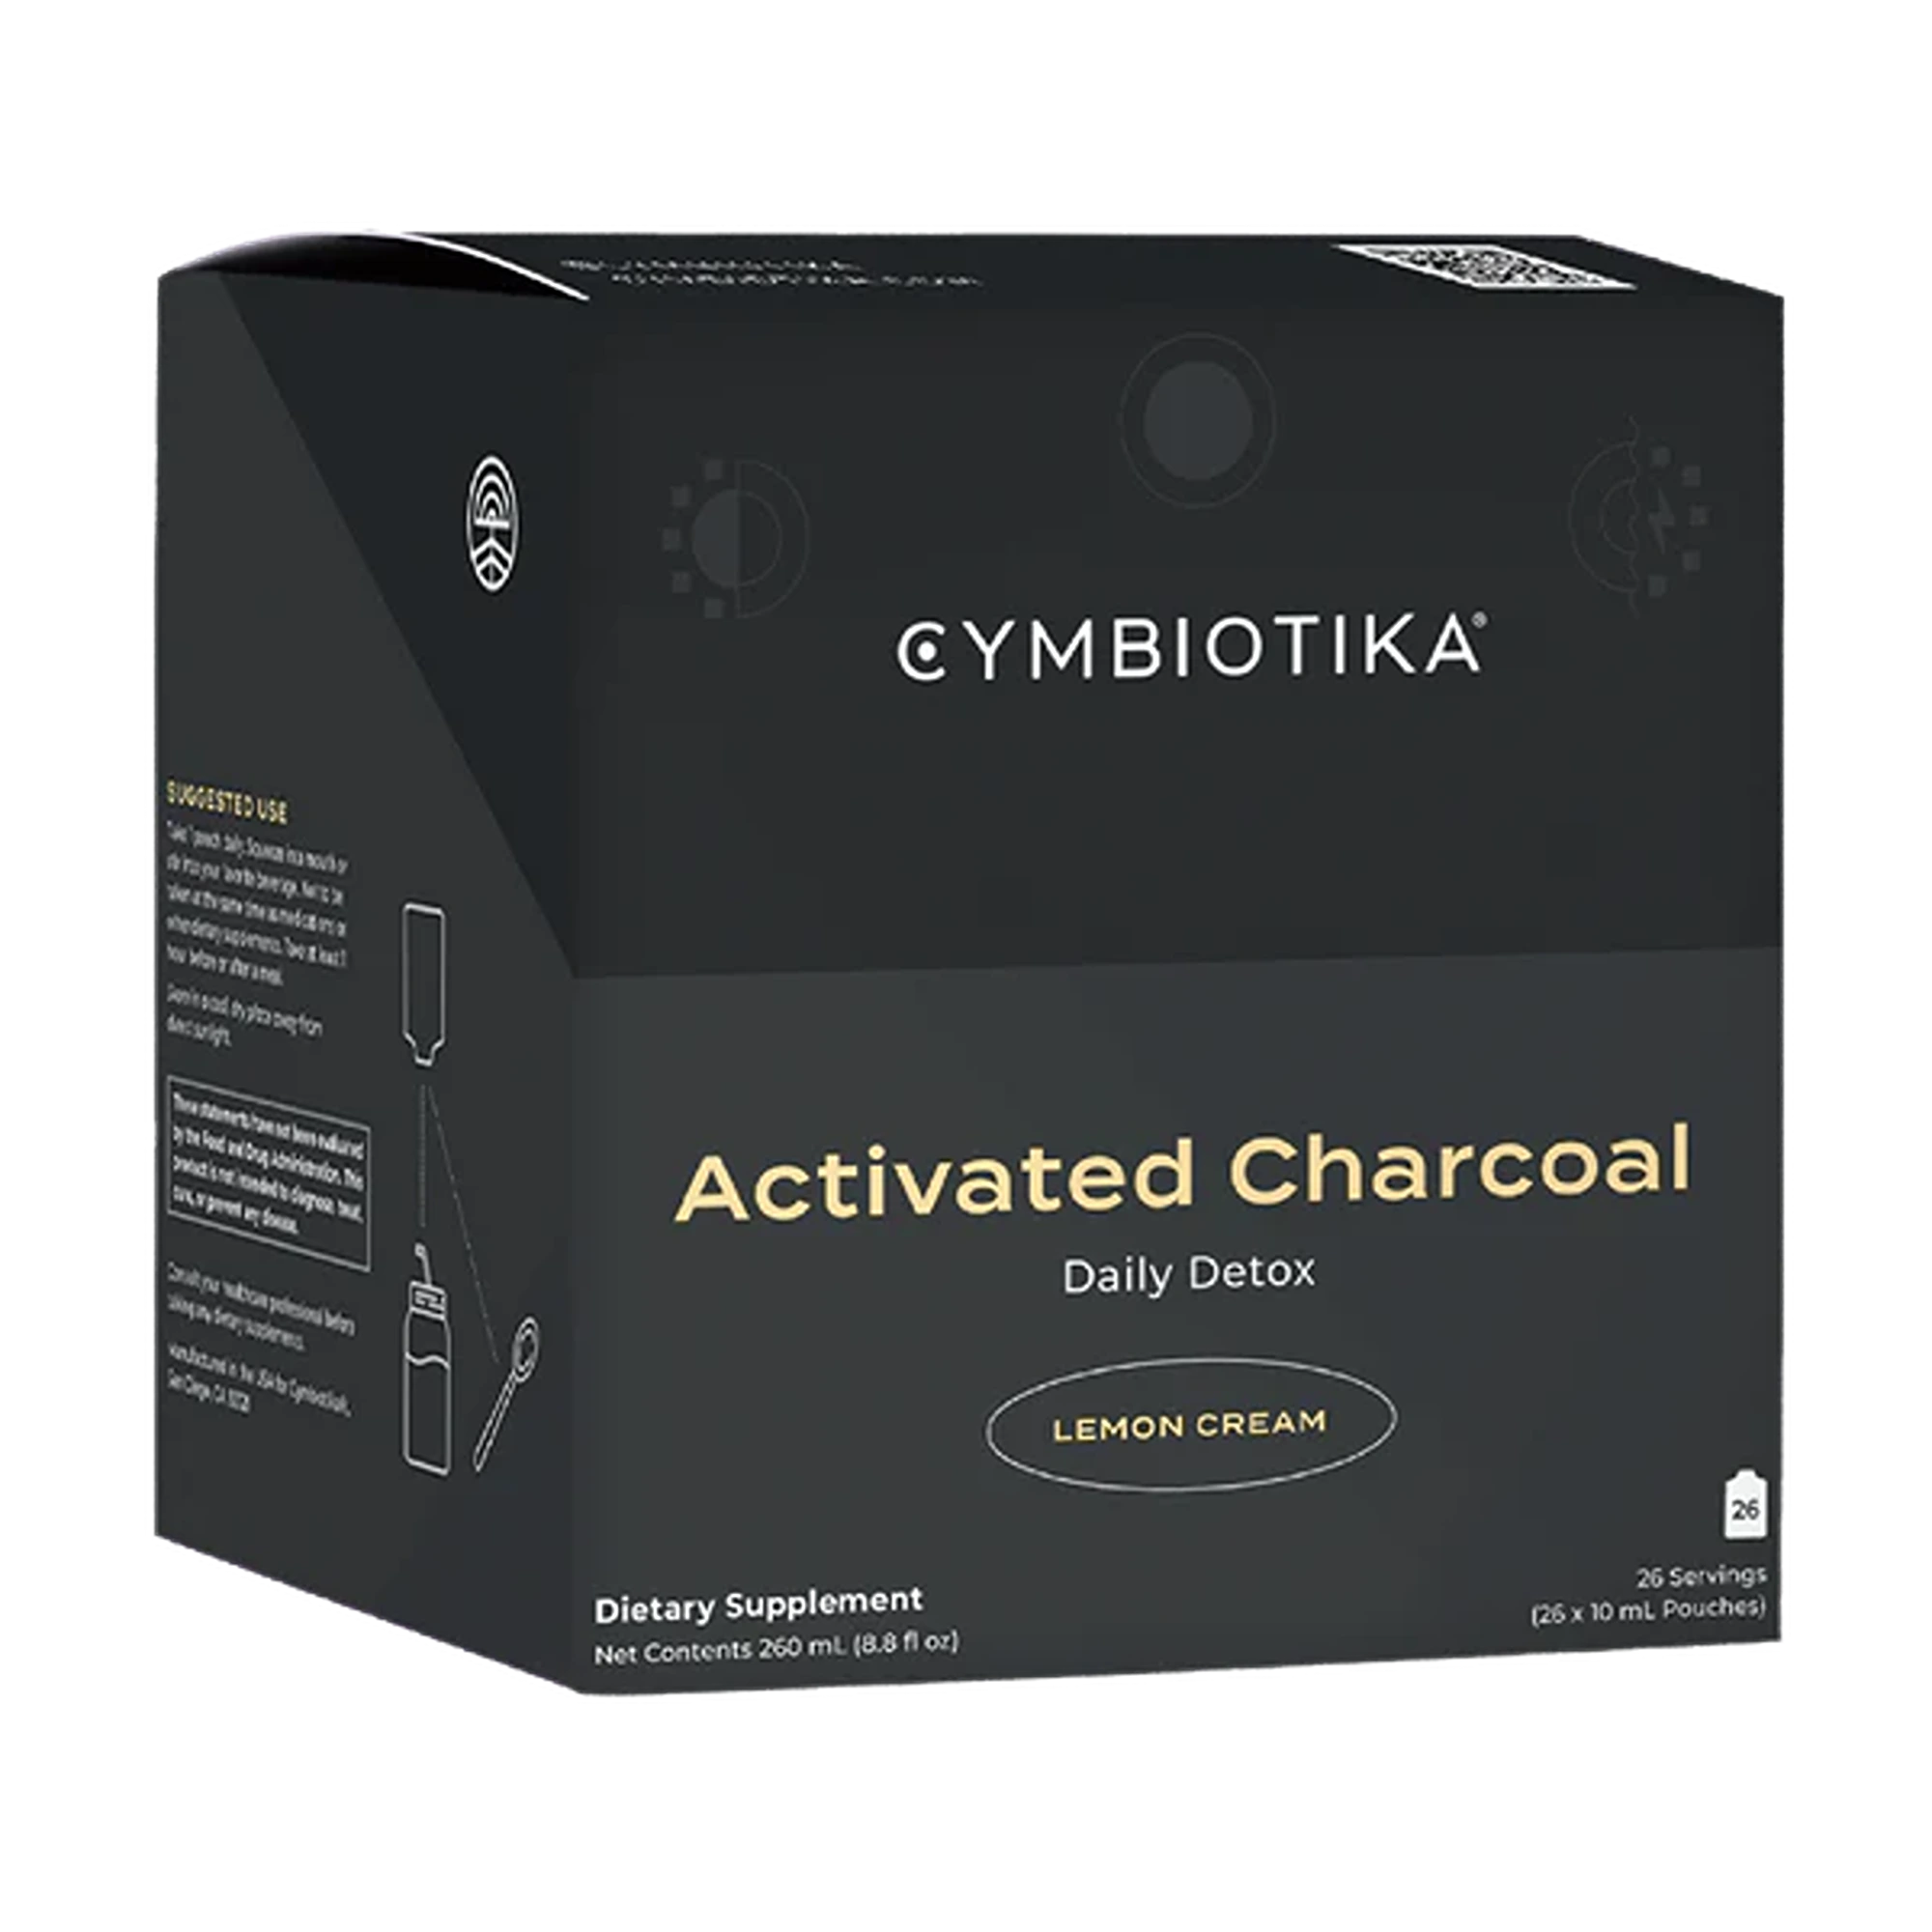 Cymbiotika Activated Charcoal 26 x 10mL